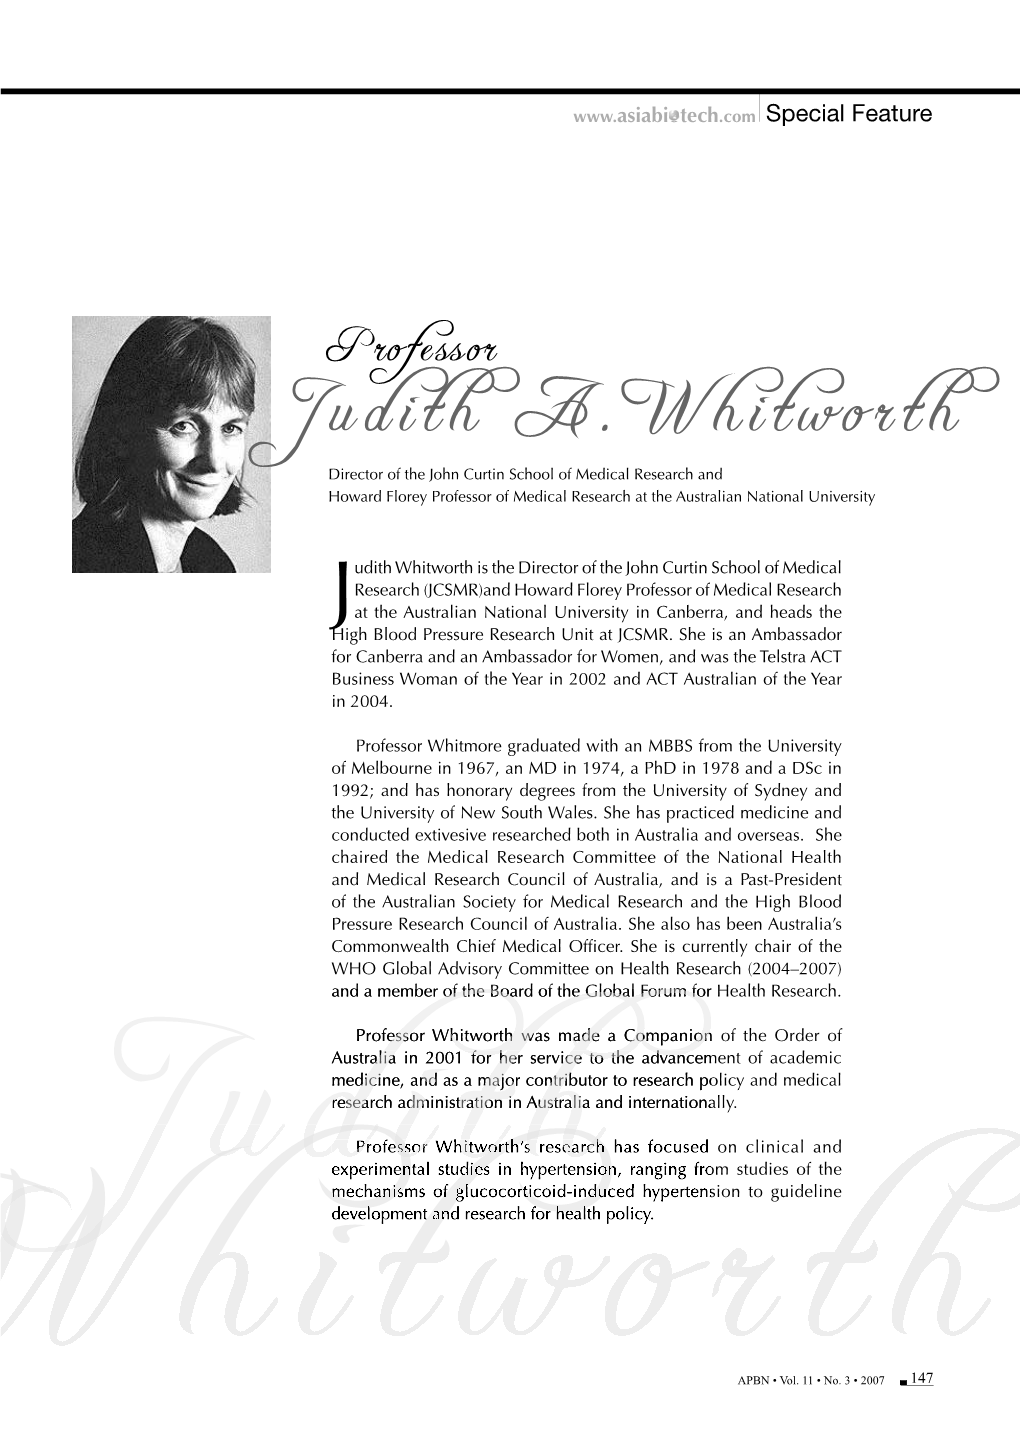 Professor Judith A. Whitworth